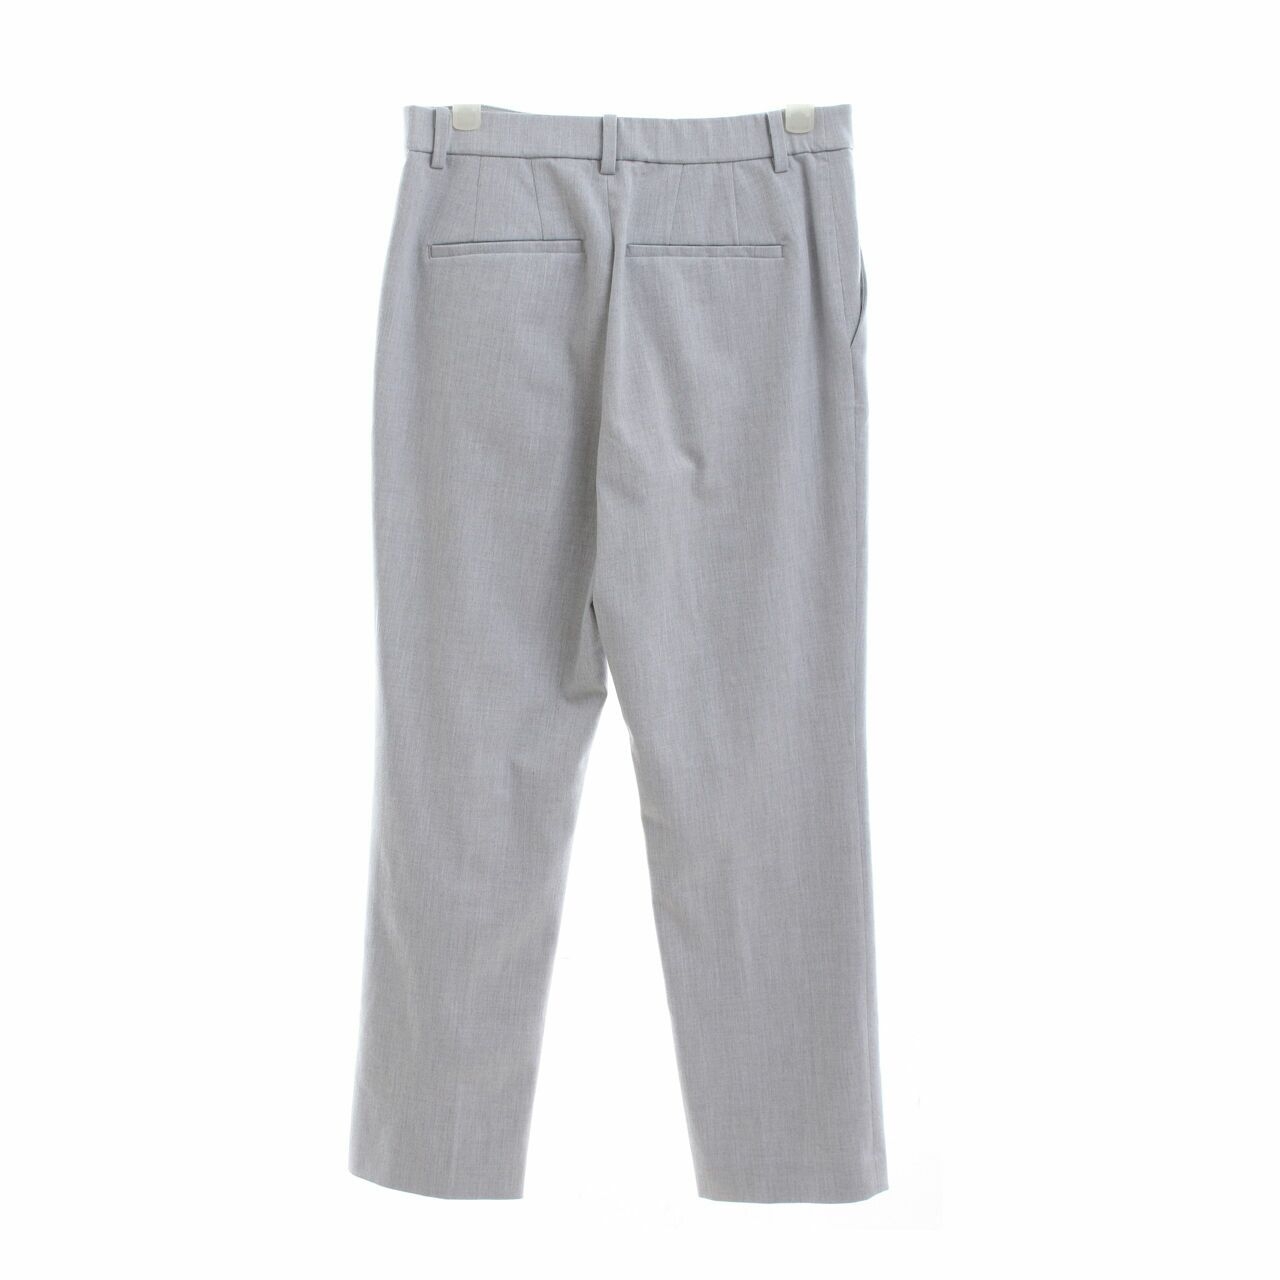 UNIQLO Light Grey Long Pants 